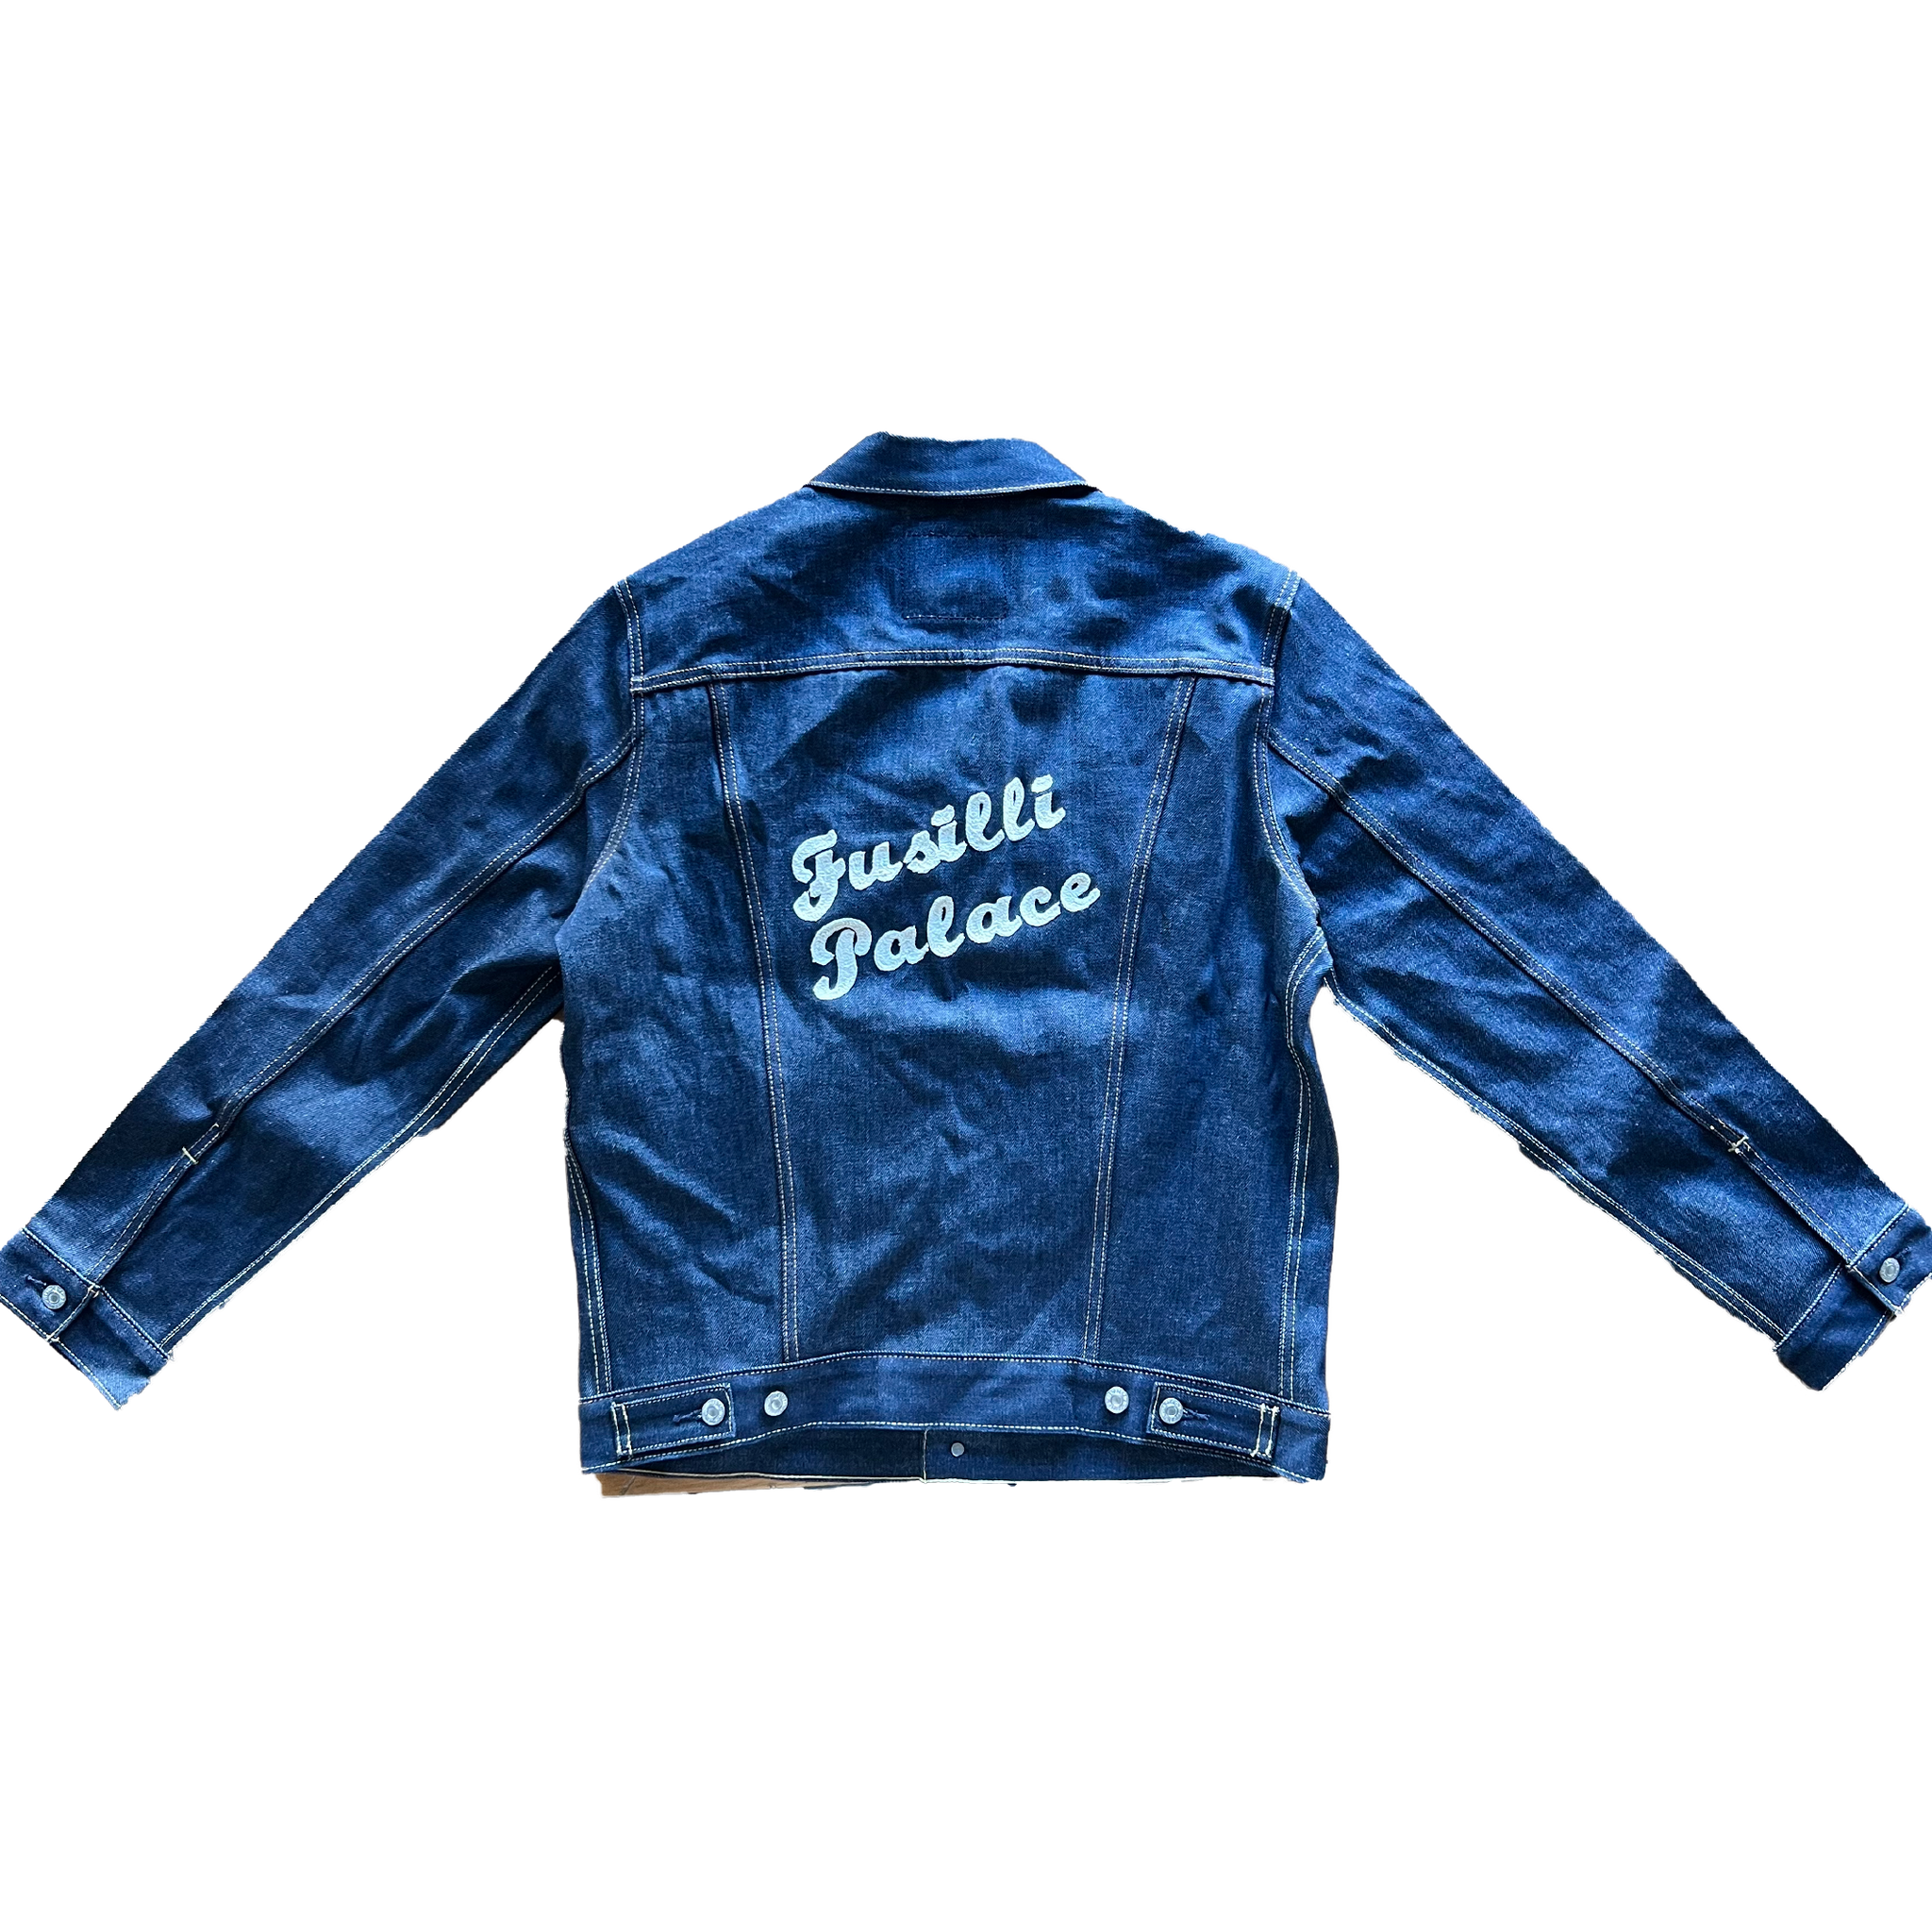 fusilli palace chainstitch denim jacket | Jon and Vinny's Merch